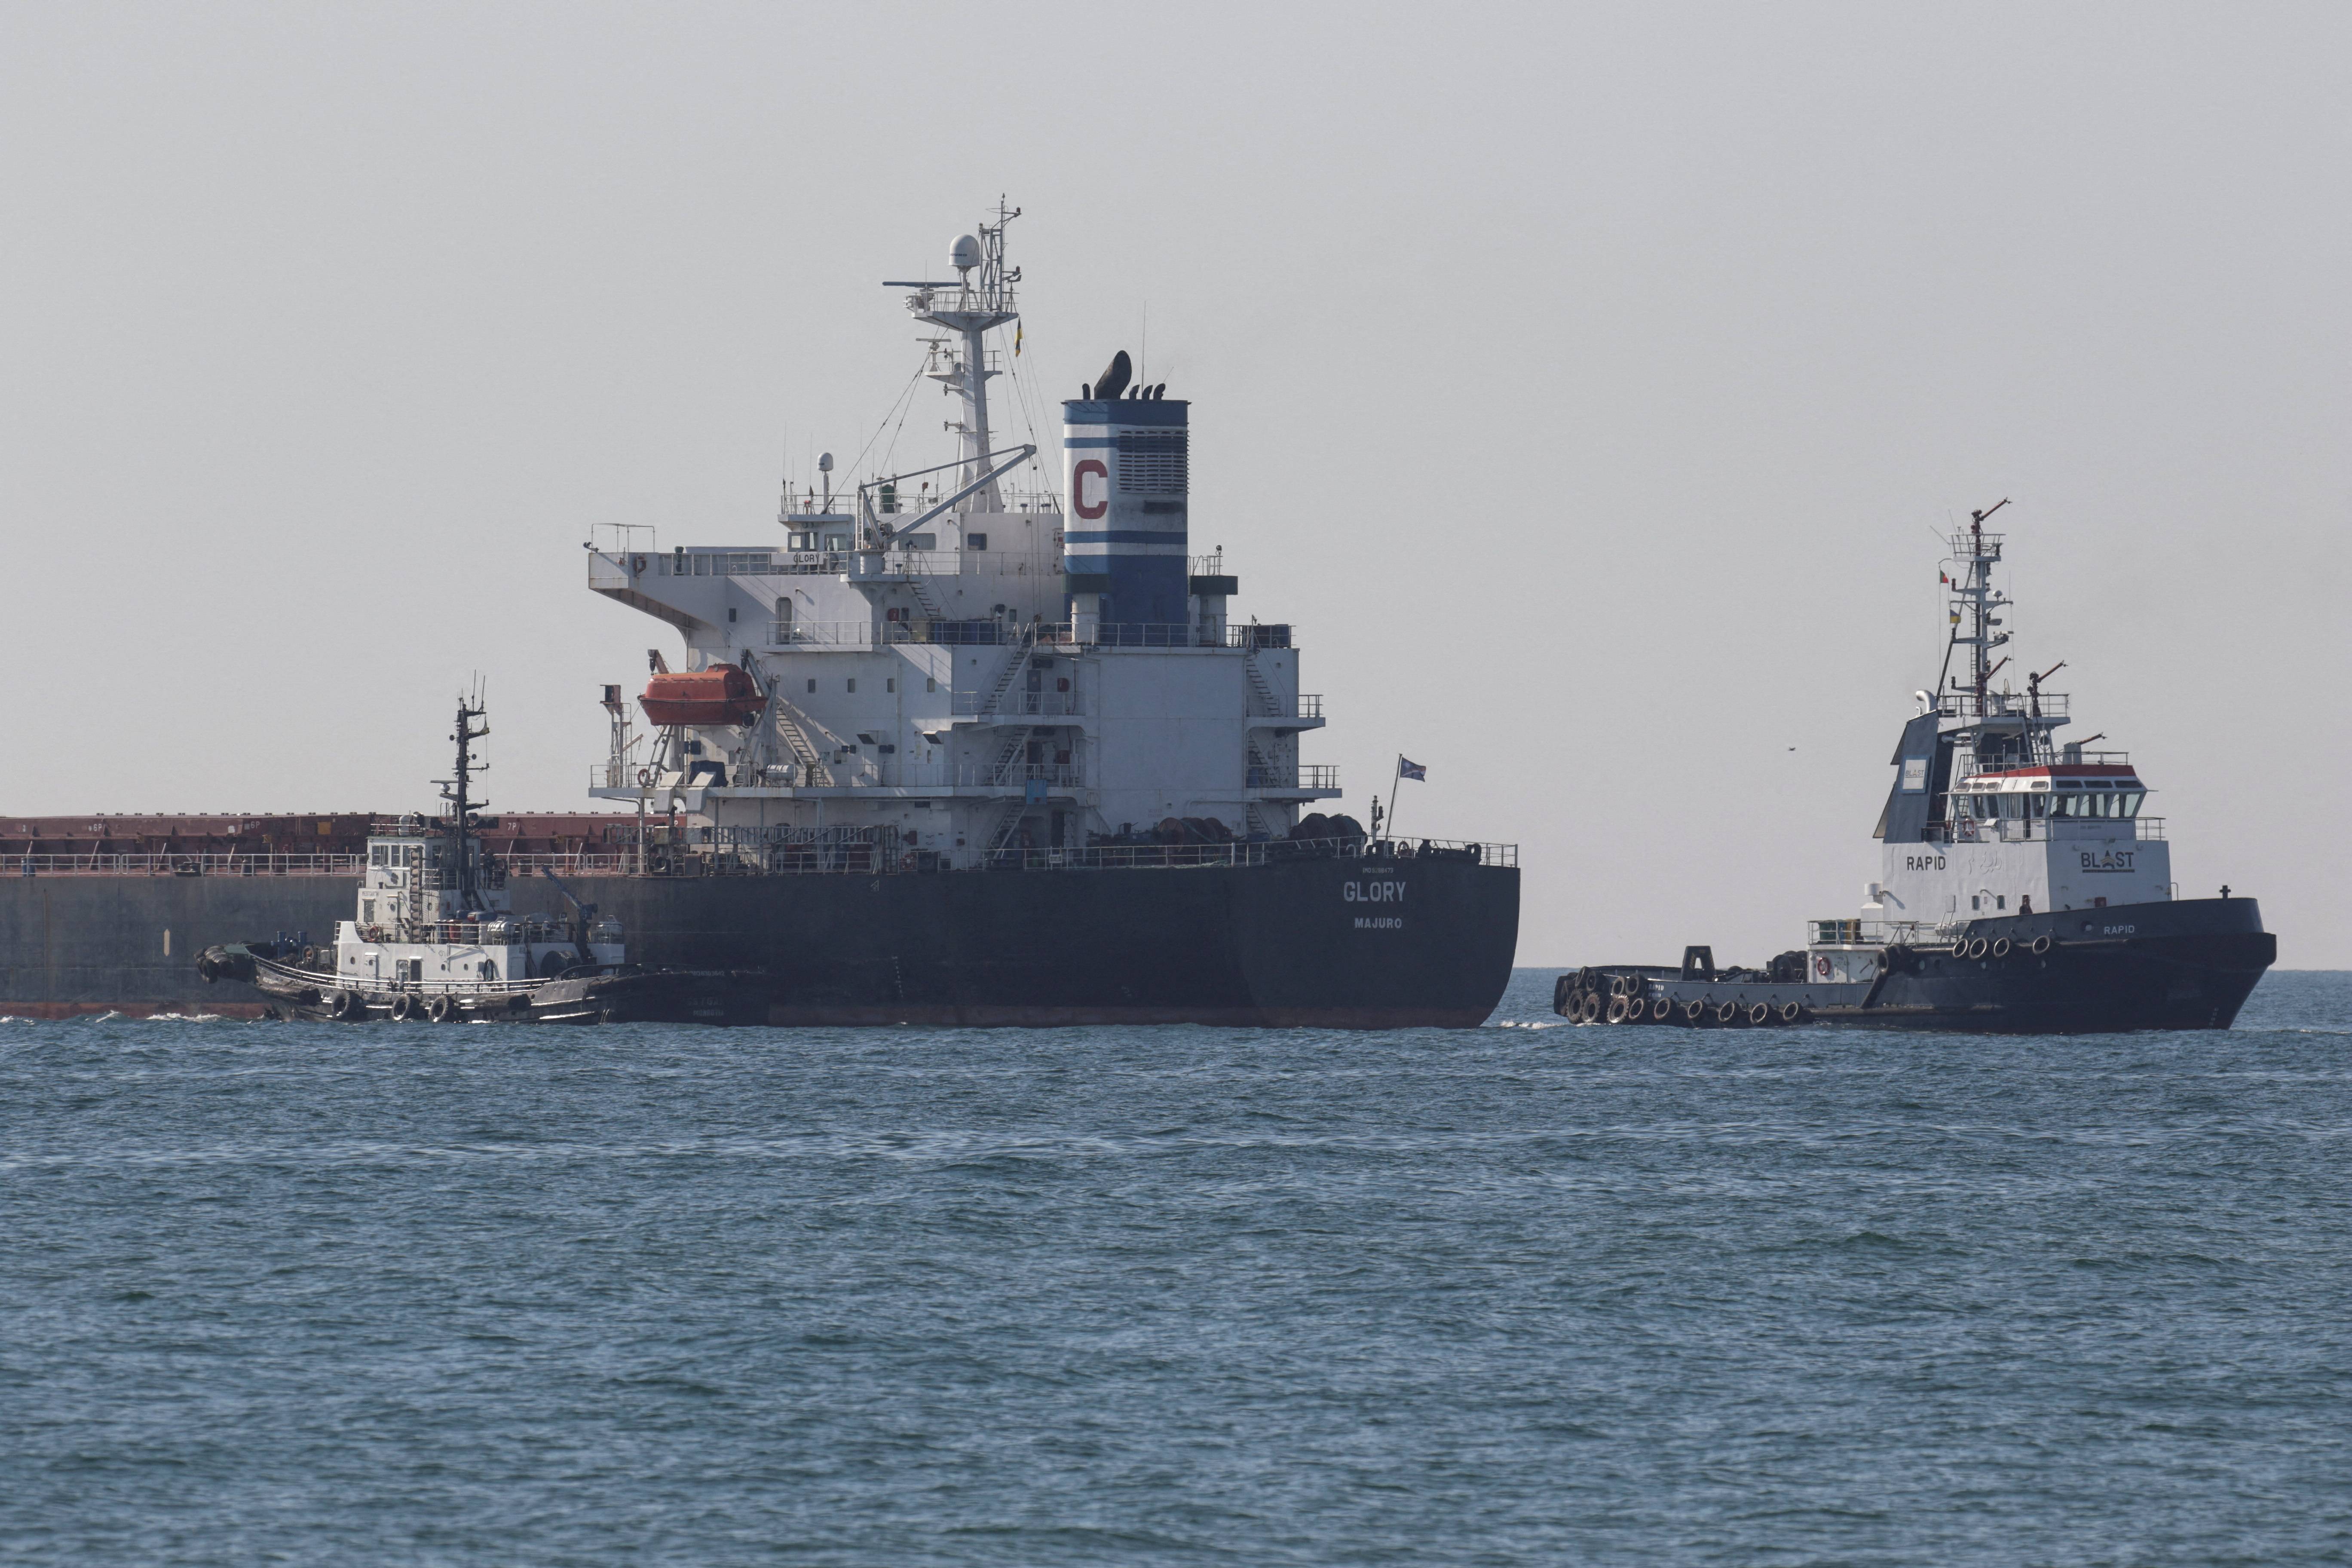 The bulk carrier Glory leaves the sea port in Chornomorsk